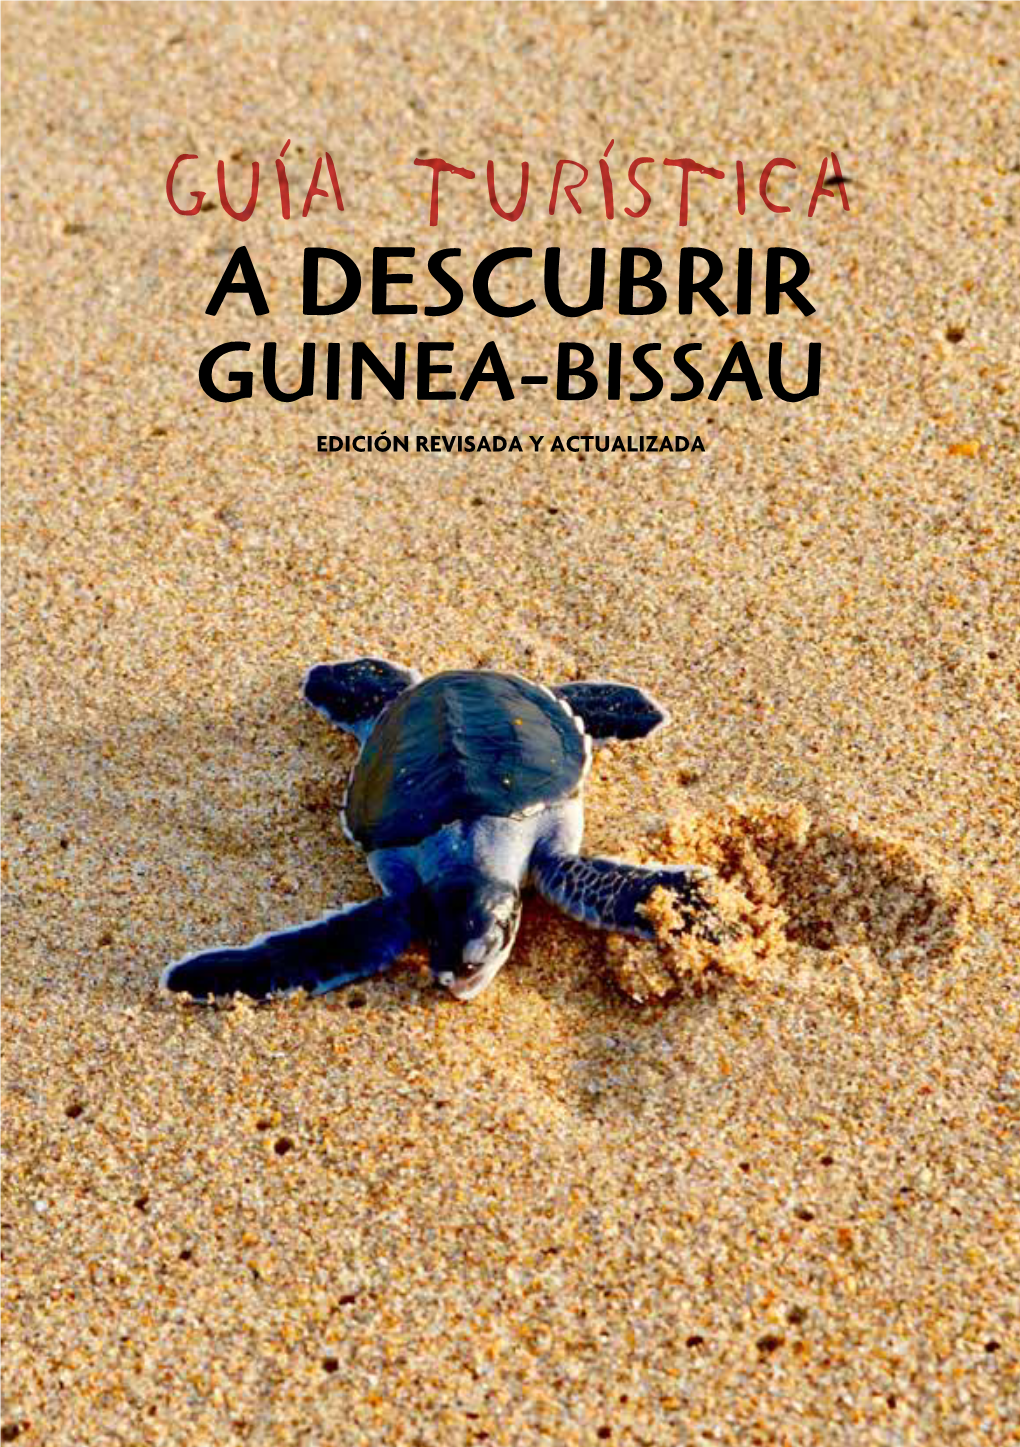 A Descubrir Guinea-Bissau a Descubrir a DESCUBRIR GUINEA-BISSAU EDICIÓN REVISADA Y ACTUALIZADA